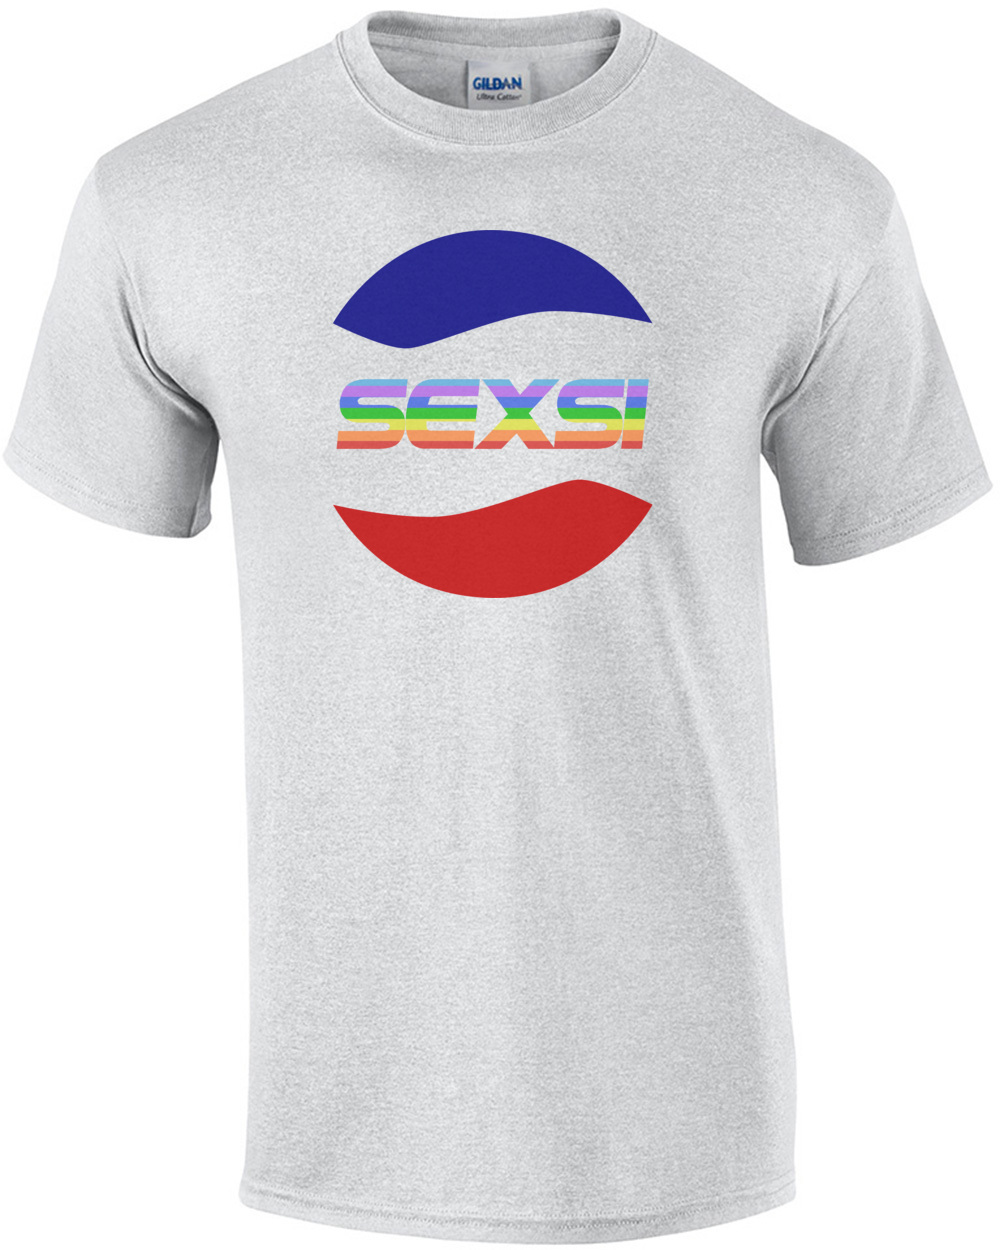 Sexsi Rainbow - Pepsi Parody - Gay Pride - Lesbian T-Shirt | eBay